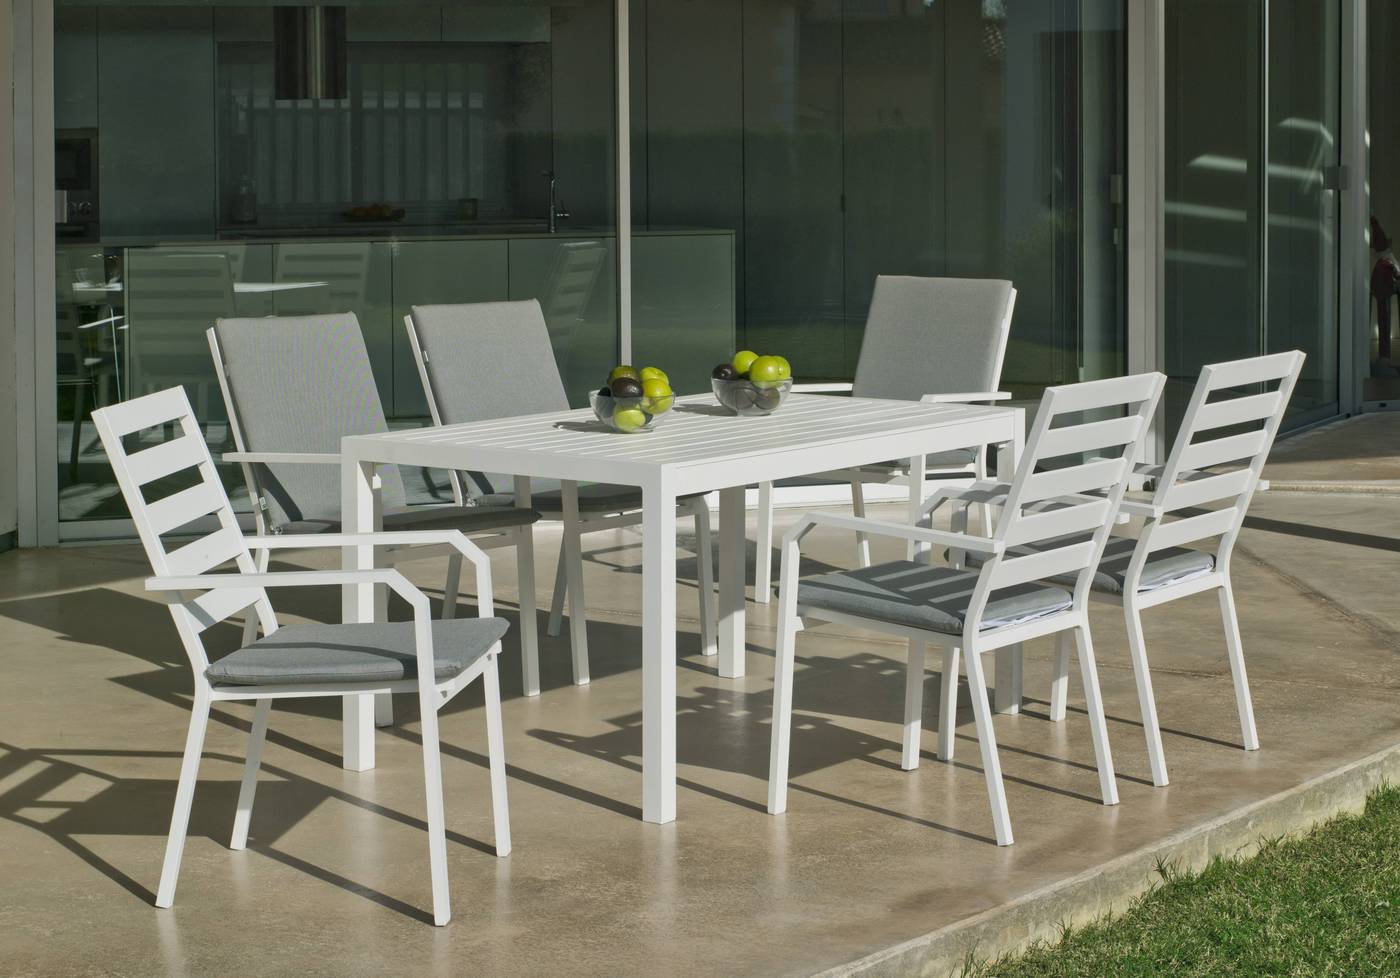 Conjunto aluminio luxe: Mesa rectangular 150 cm + 6 sillones. Disponible en color blanco, antracita, champagne, plata o marrón.